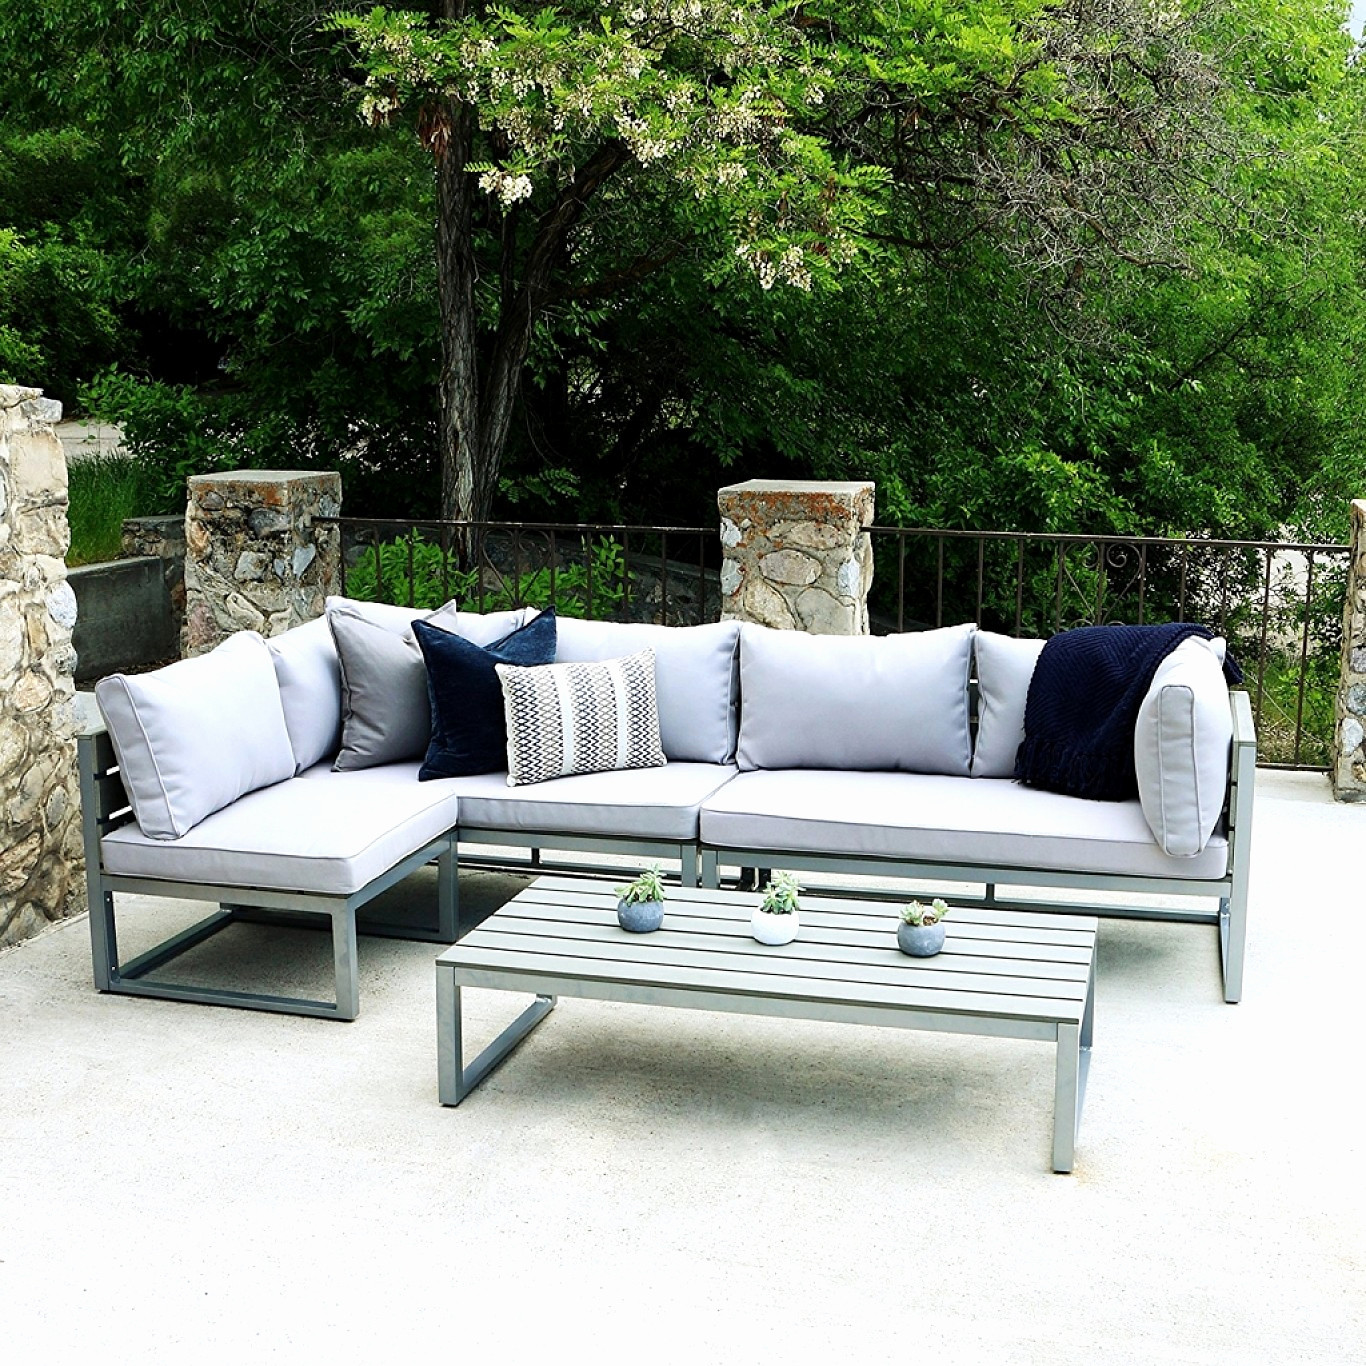 Best ideas about Liquidation Patio Furniture
. Save or Pin Liquidation patio furniture theradmommy Now.